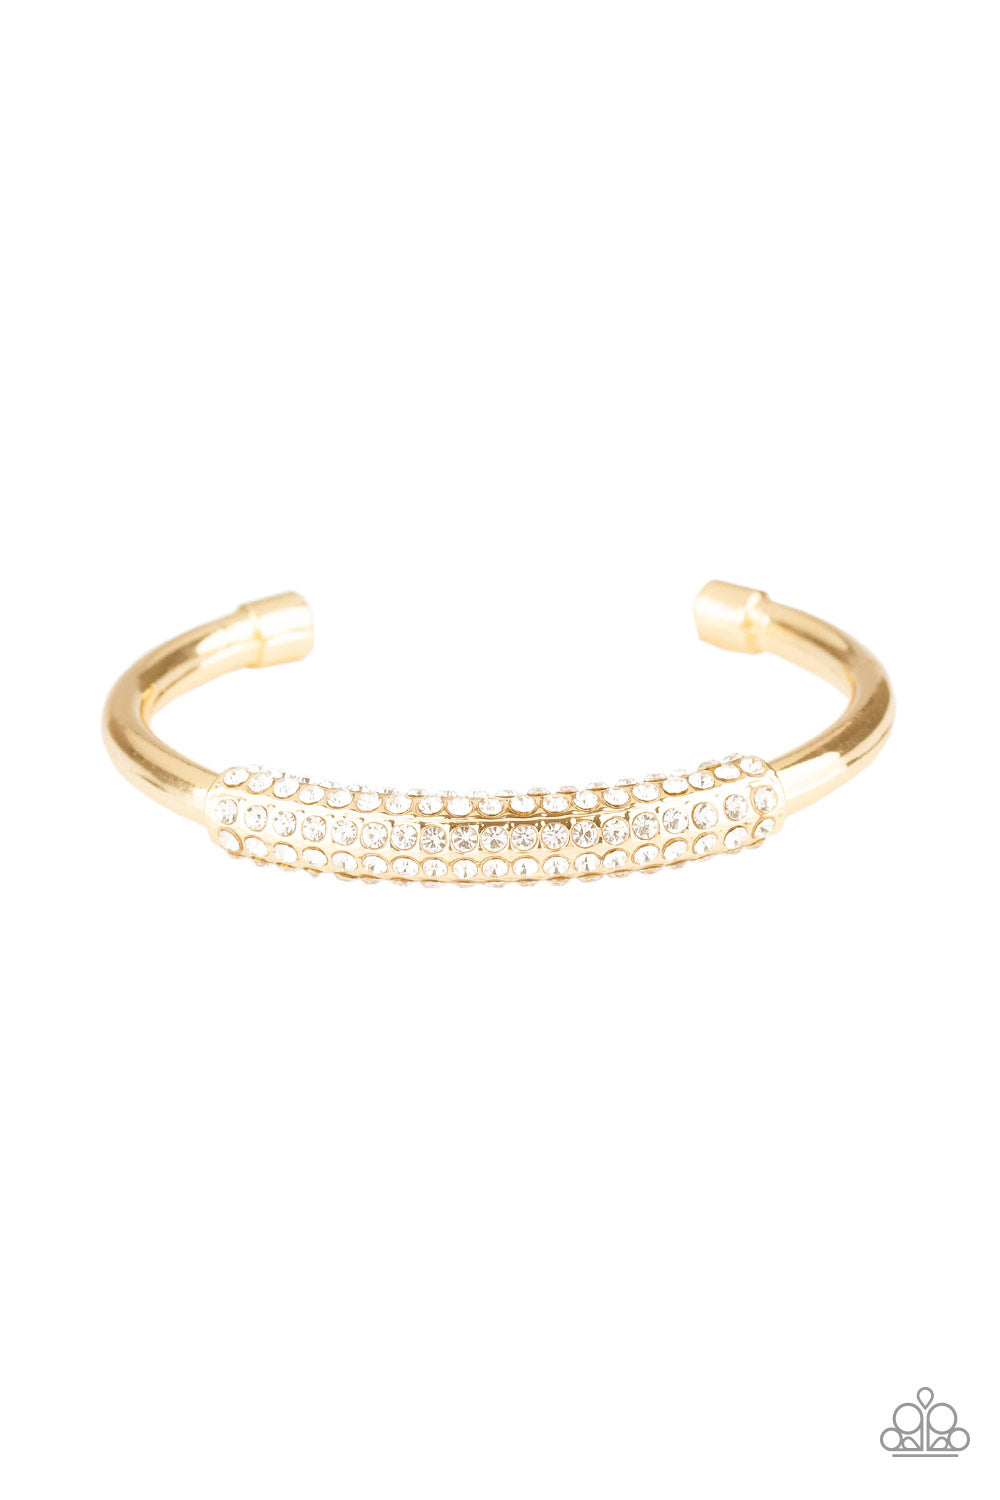 Day to Day Dazzle - Gold Bracelet